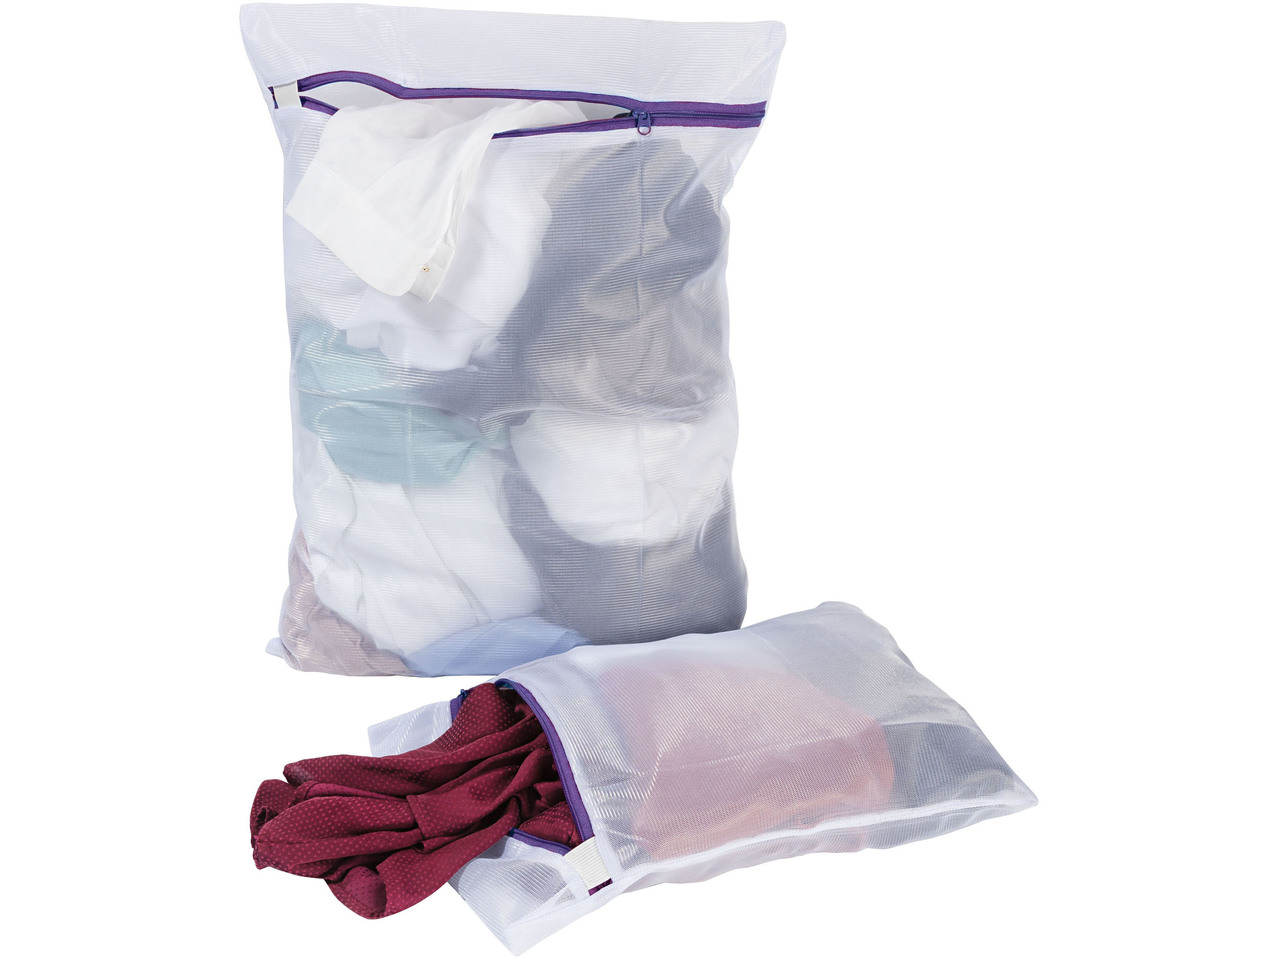 Mesh Laundry Bag Set, 2 or 3 pieces